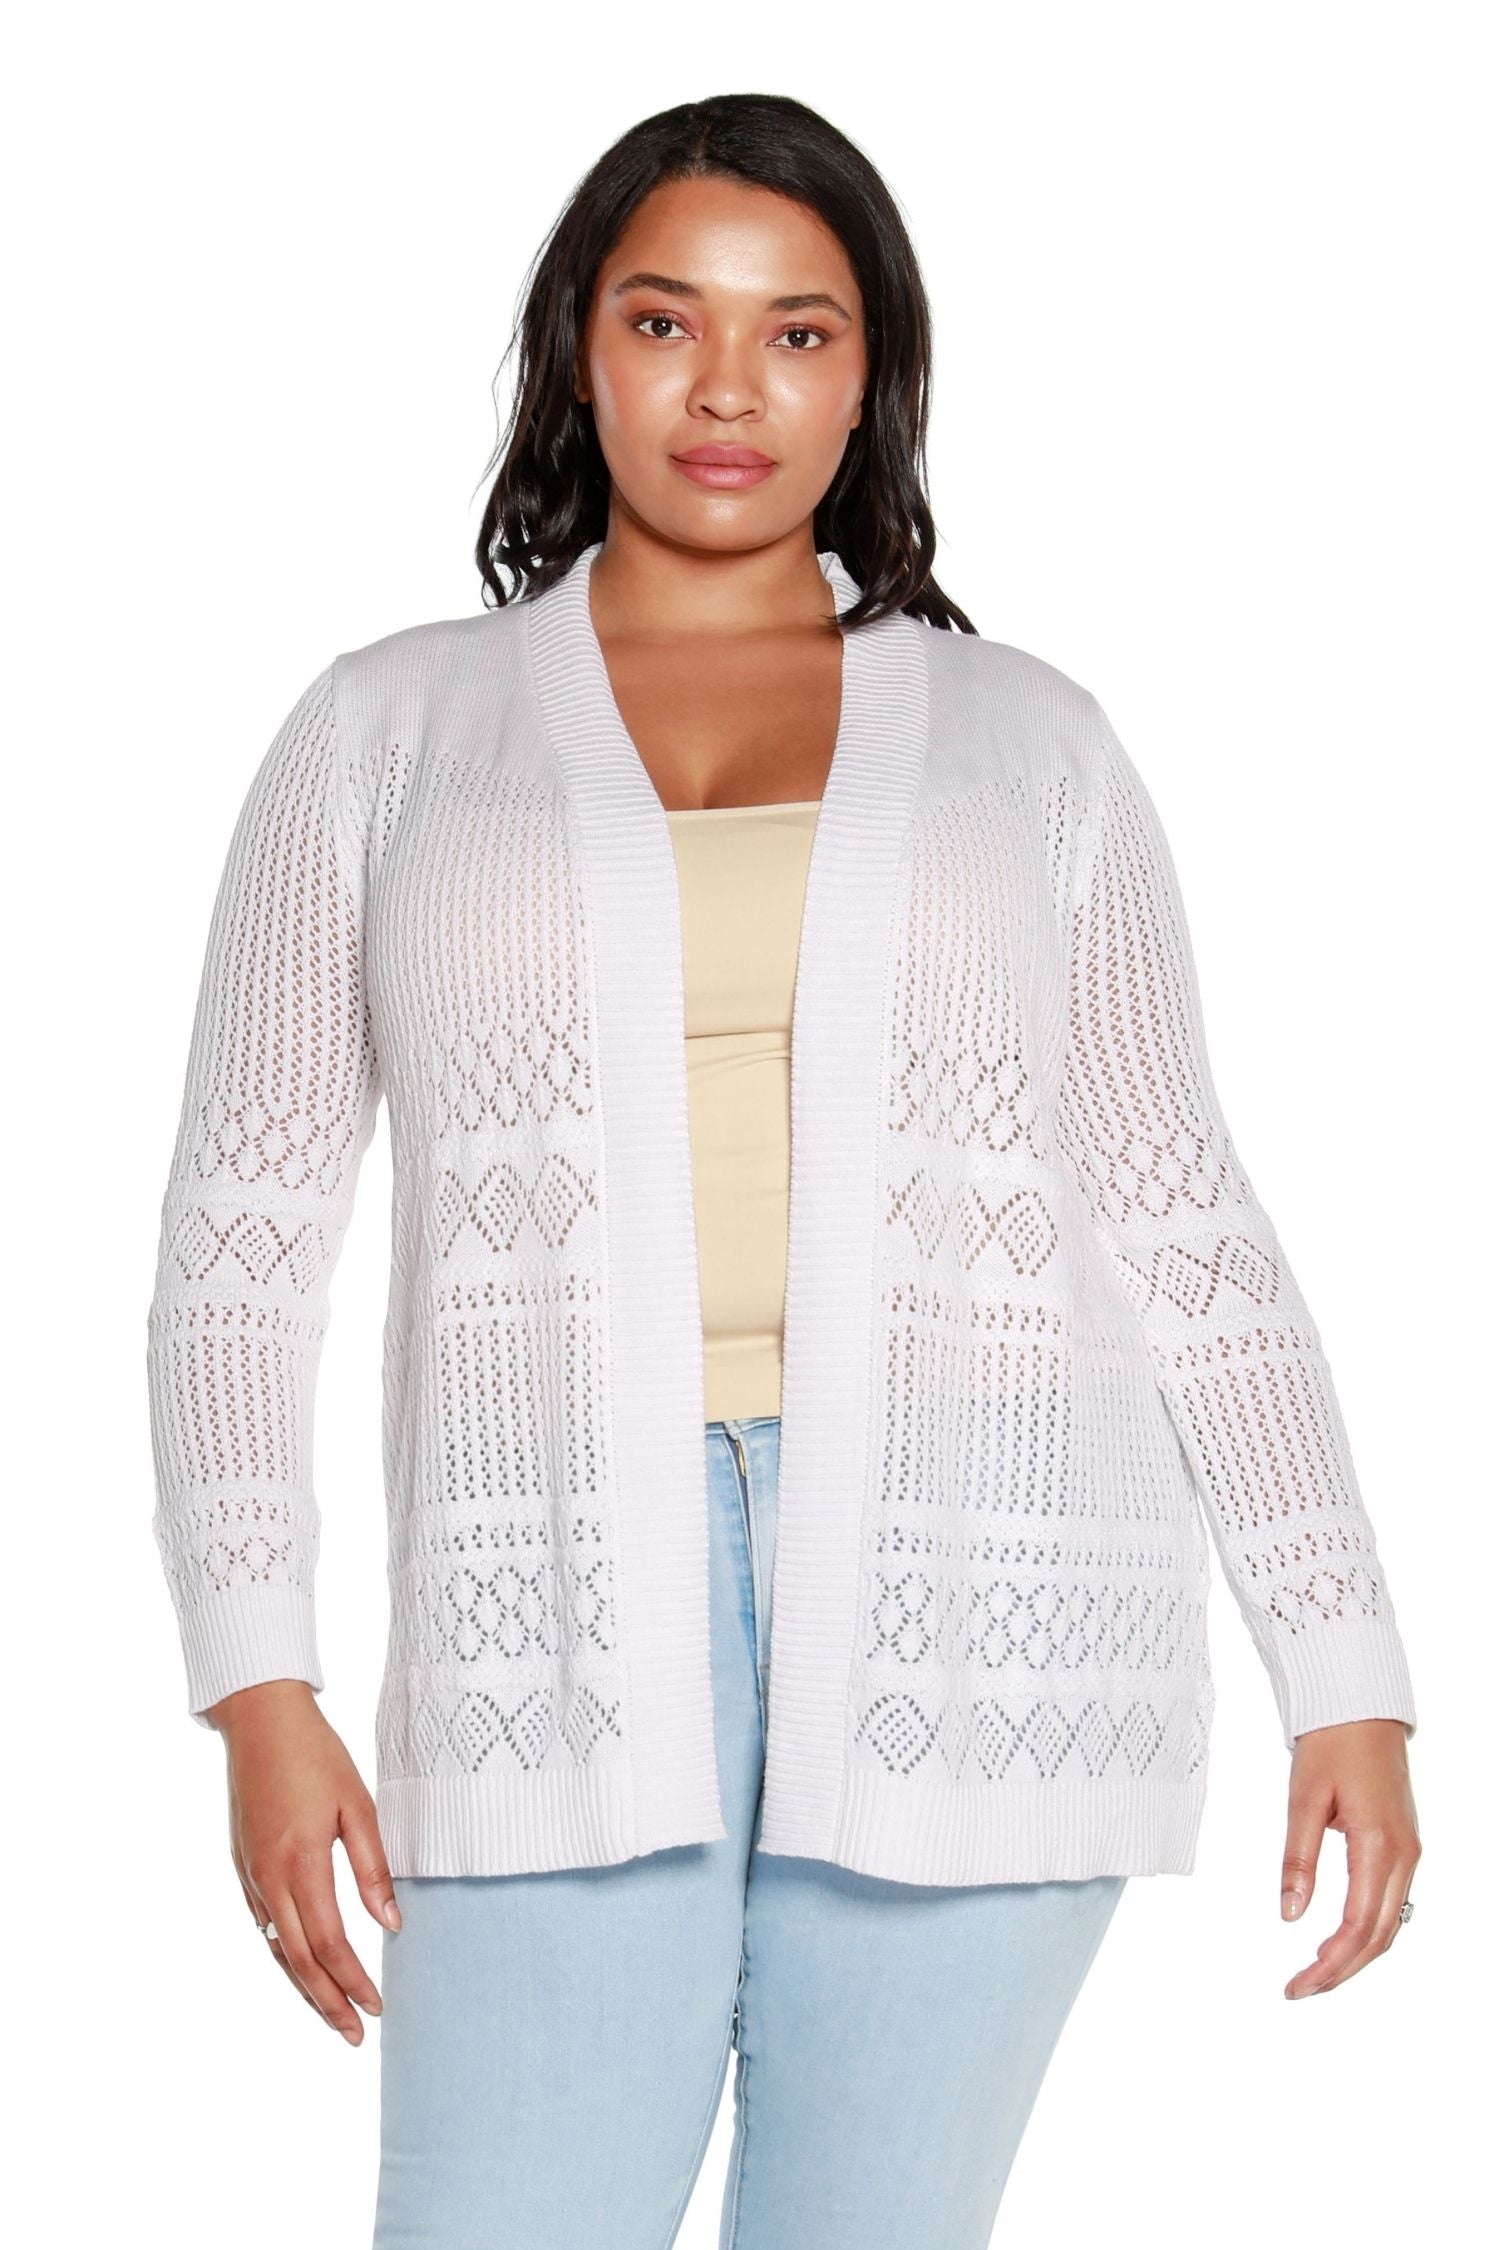 Women's Long Crochet Cardigan Mid-Hip Open Sweater with Long Sleeves | Curvy